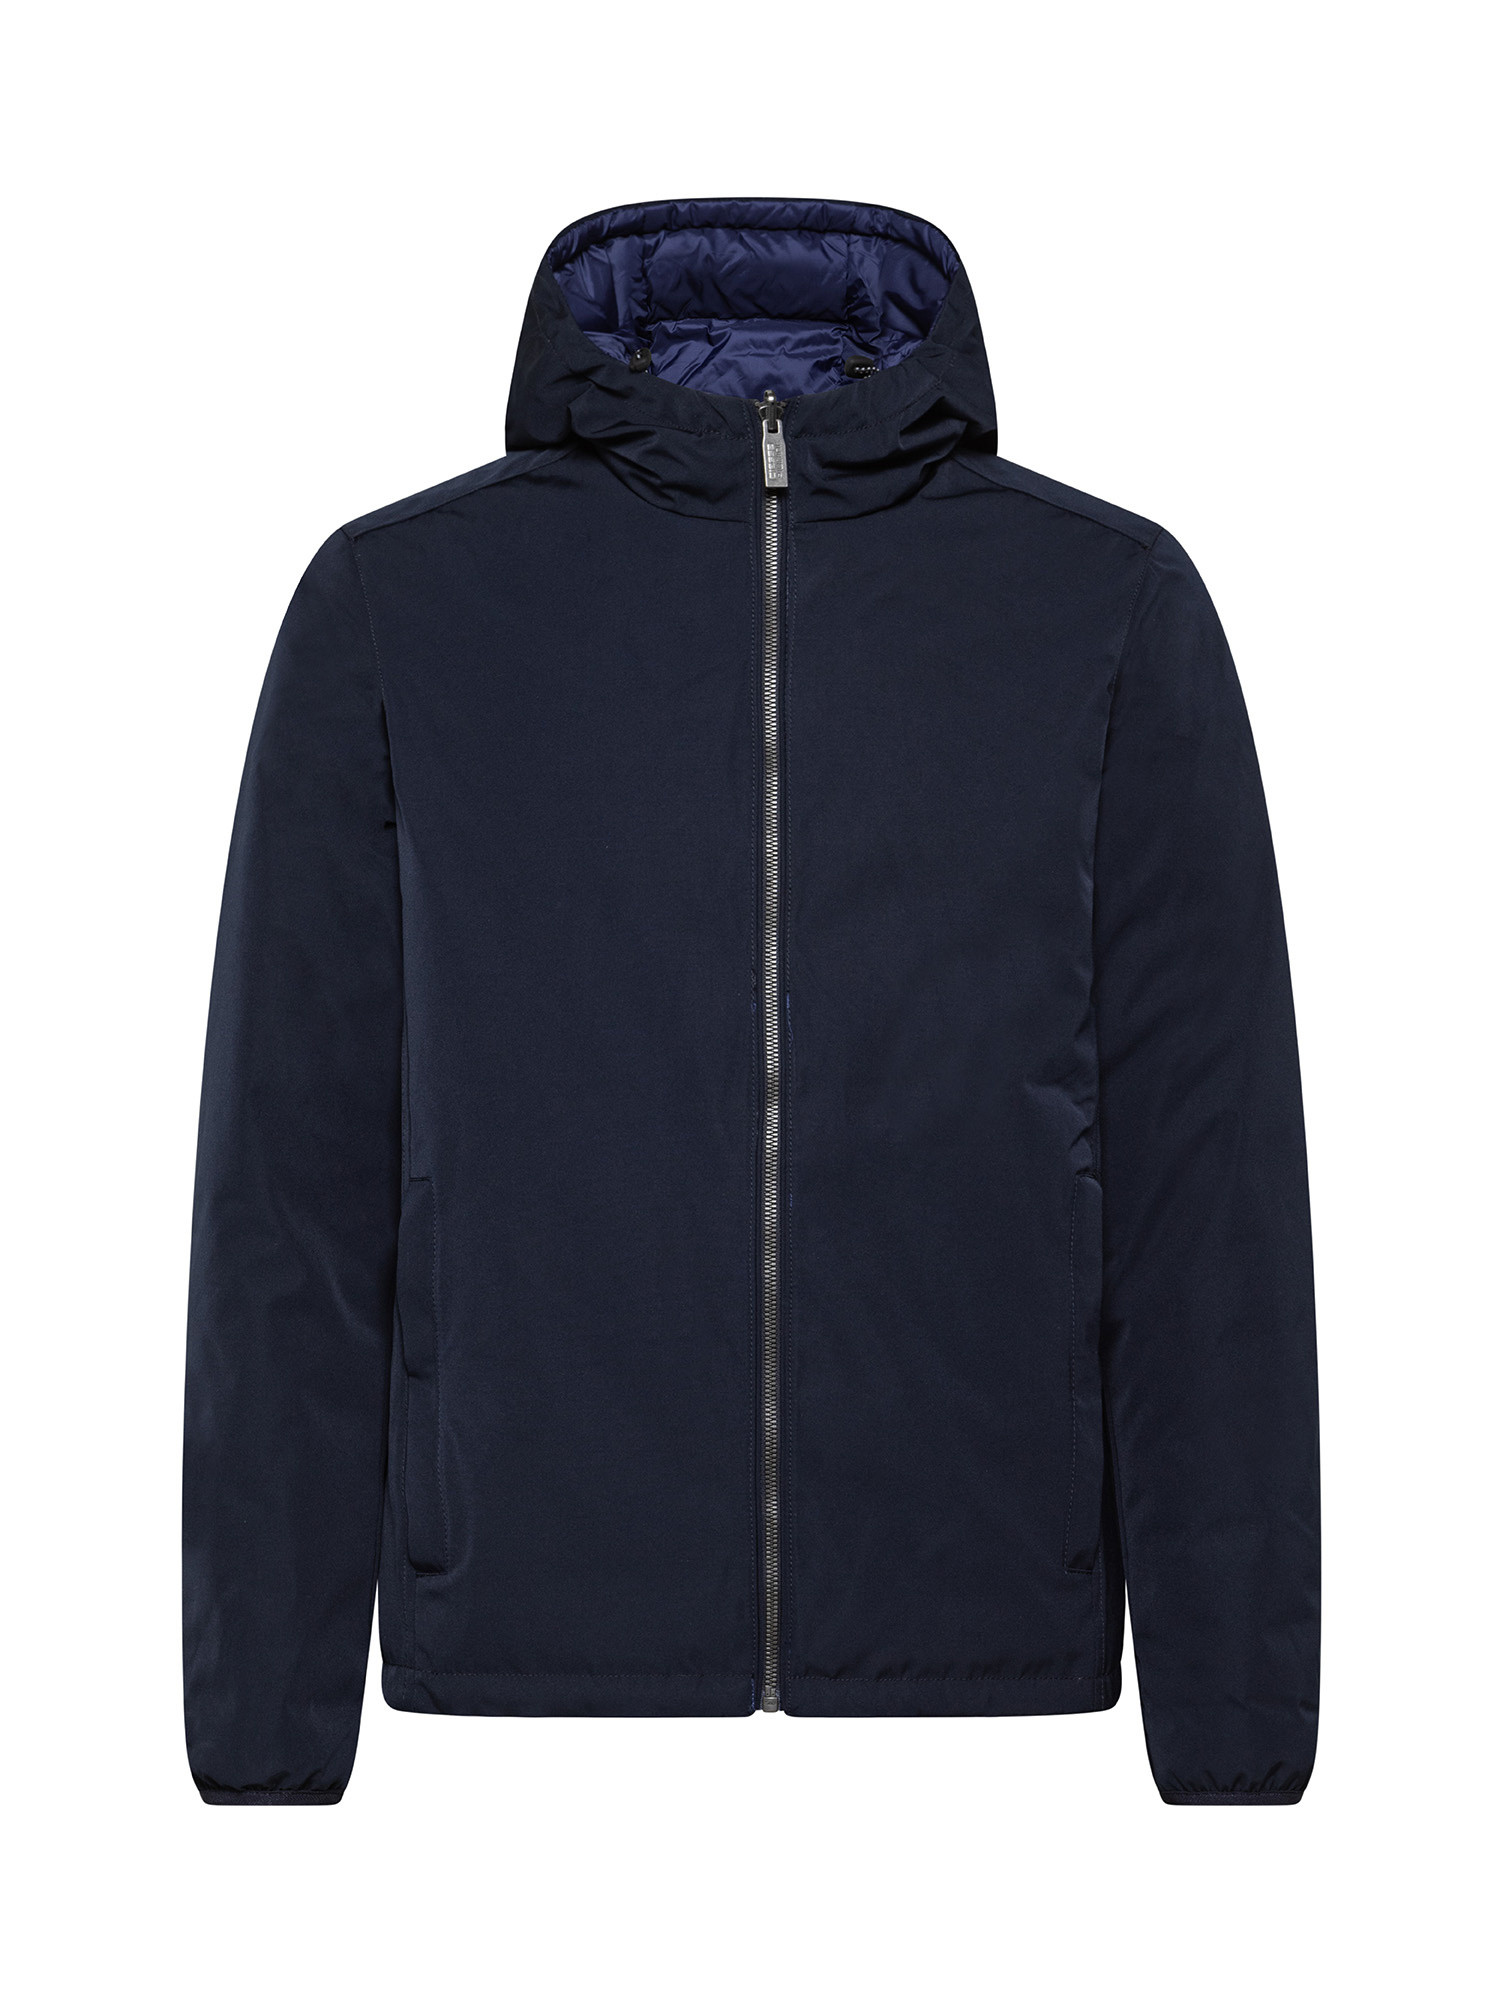 Ciesse Piumini - Reversible down jacket with hood, Dark Blue, large image number 0